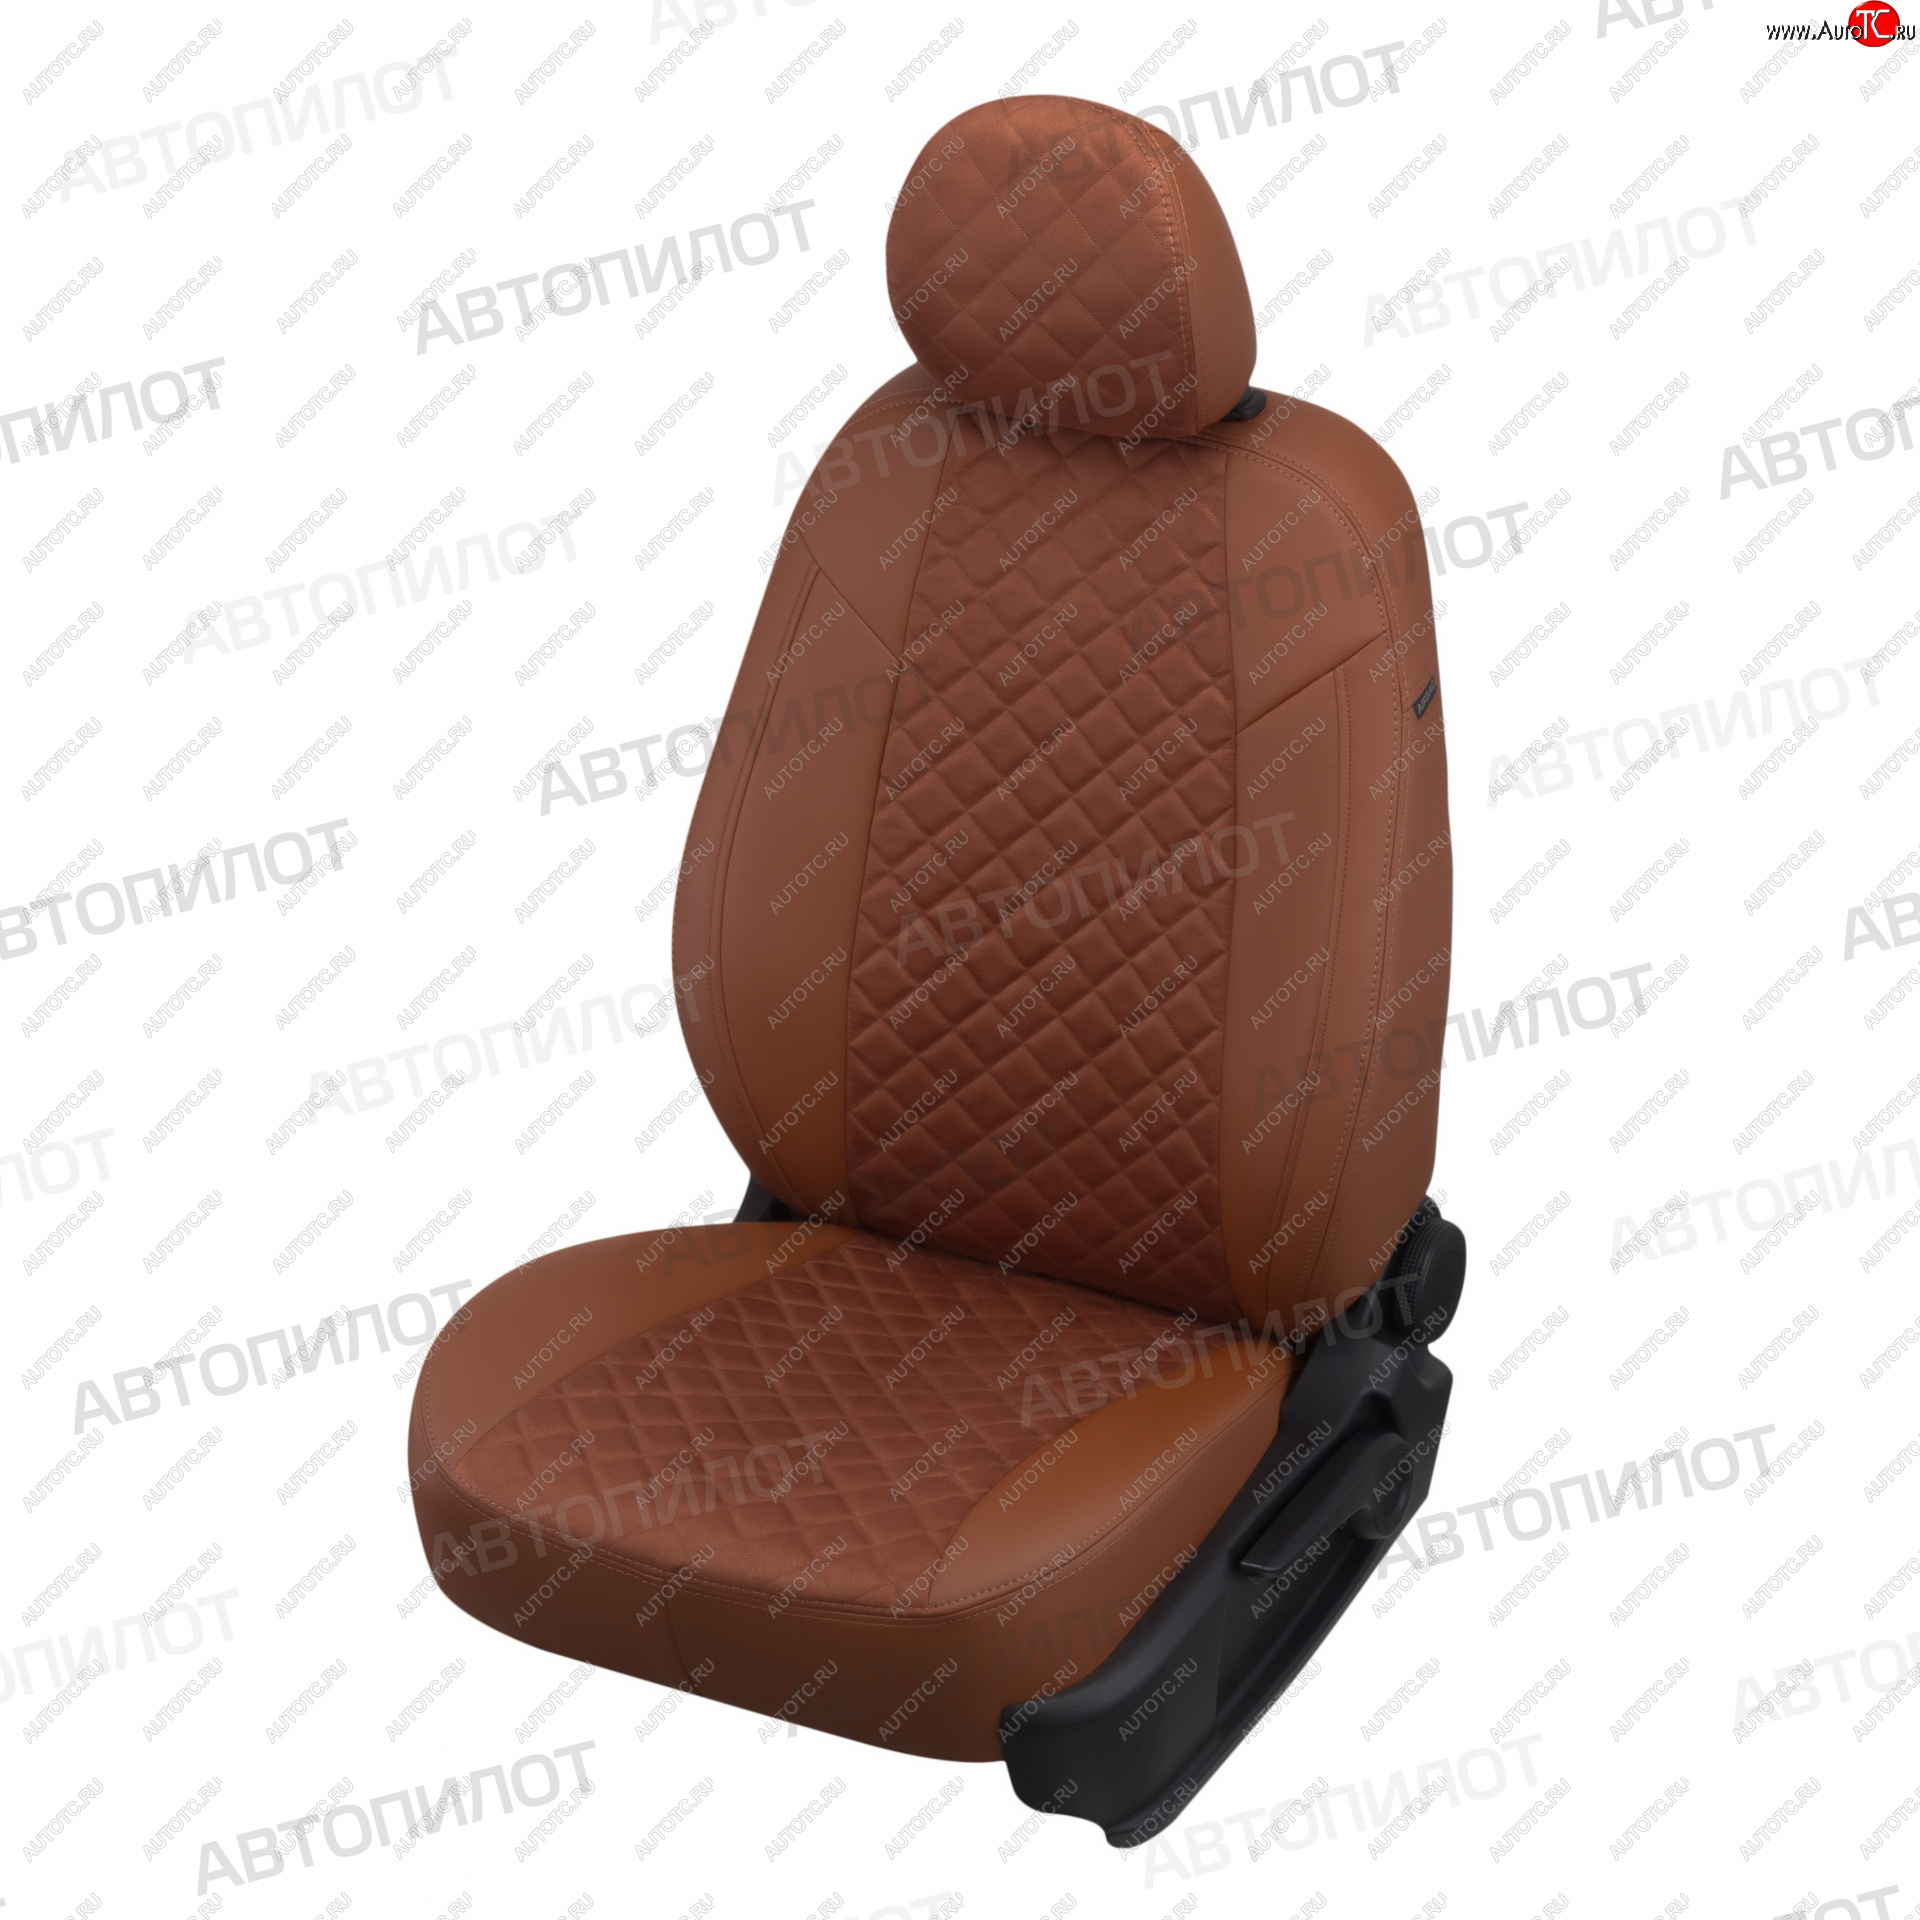 13 999 р. Чехлы сидений (экокожа/алькантара, спл.) Автопилот Ромб  BMW 3 серия  E46 (1998-2005) (коричневый)